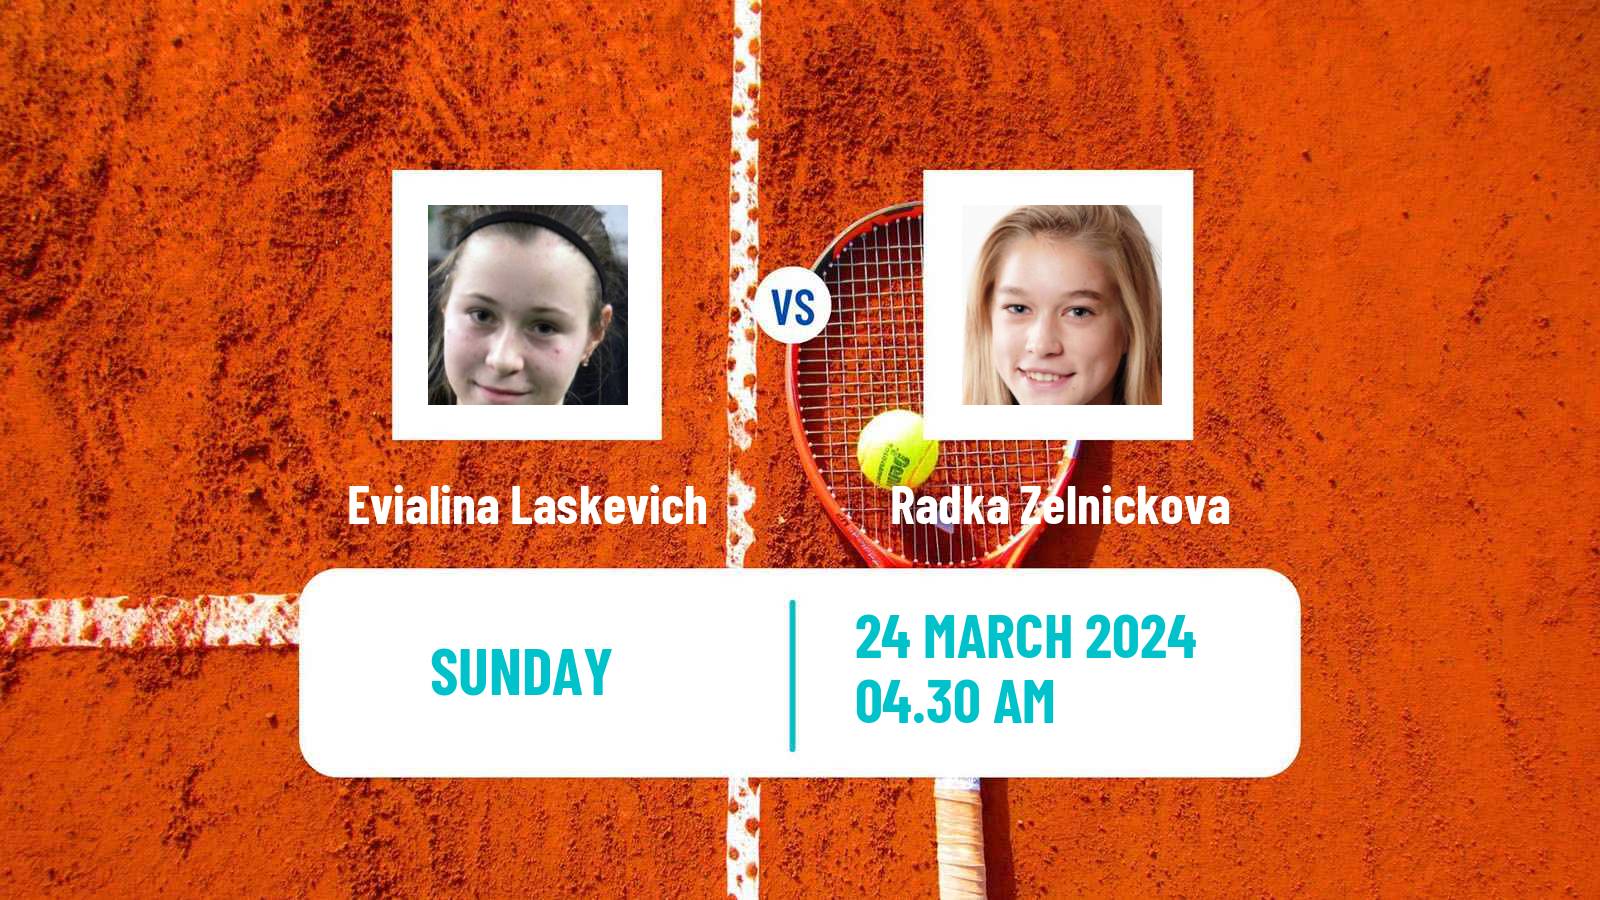 Tennis ITF W15 Monastir 10 Women Evialina Laskevich - Radka Zelnickova